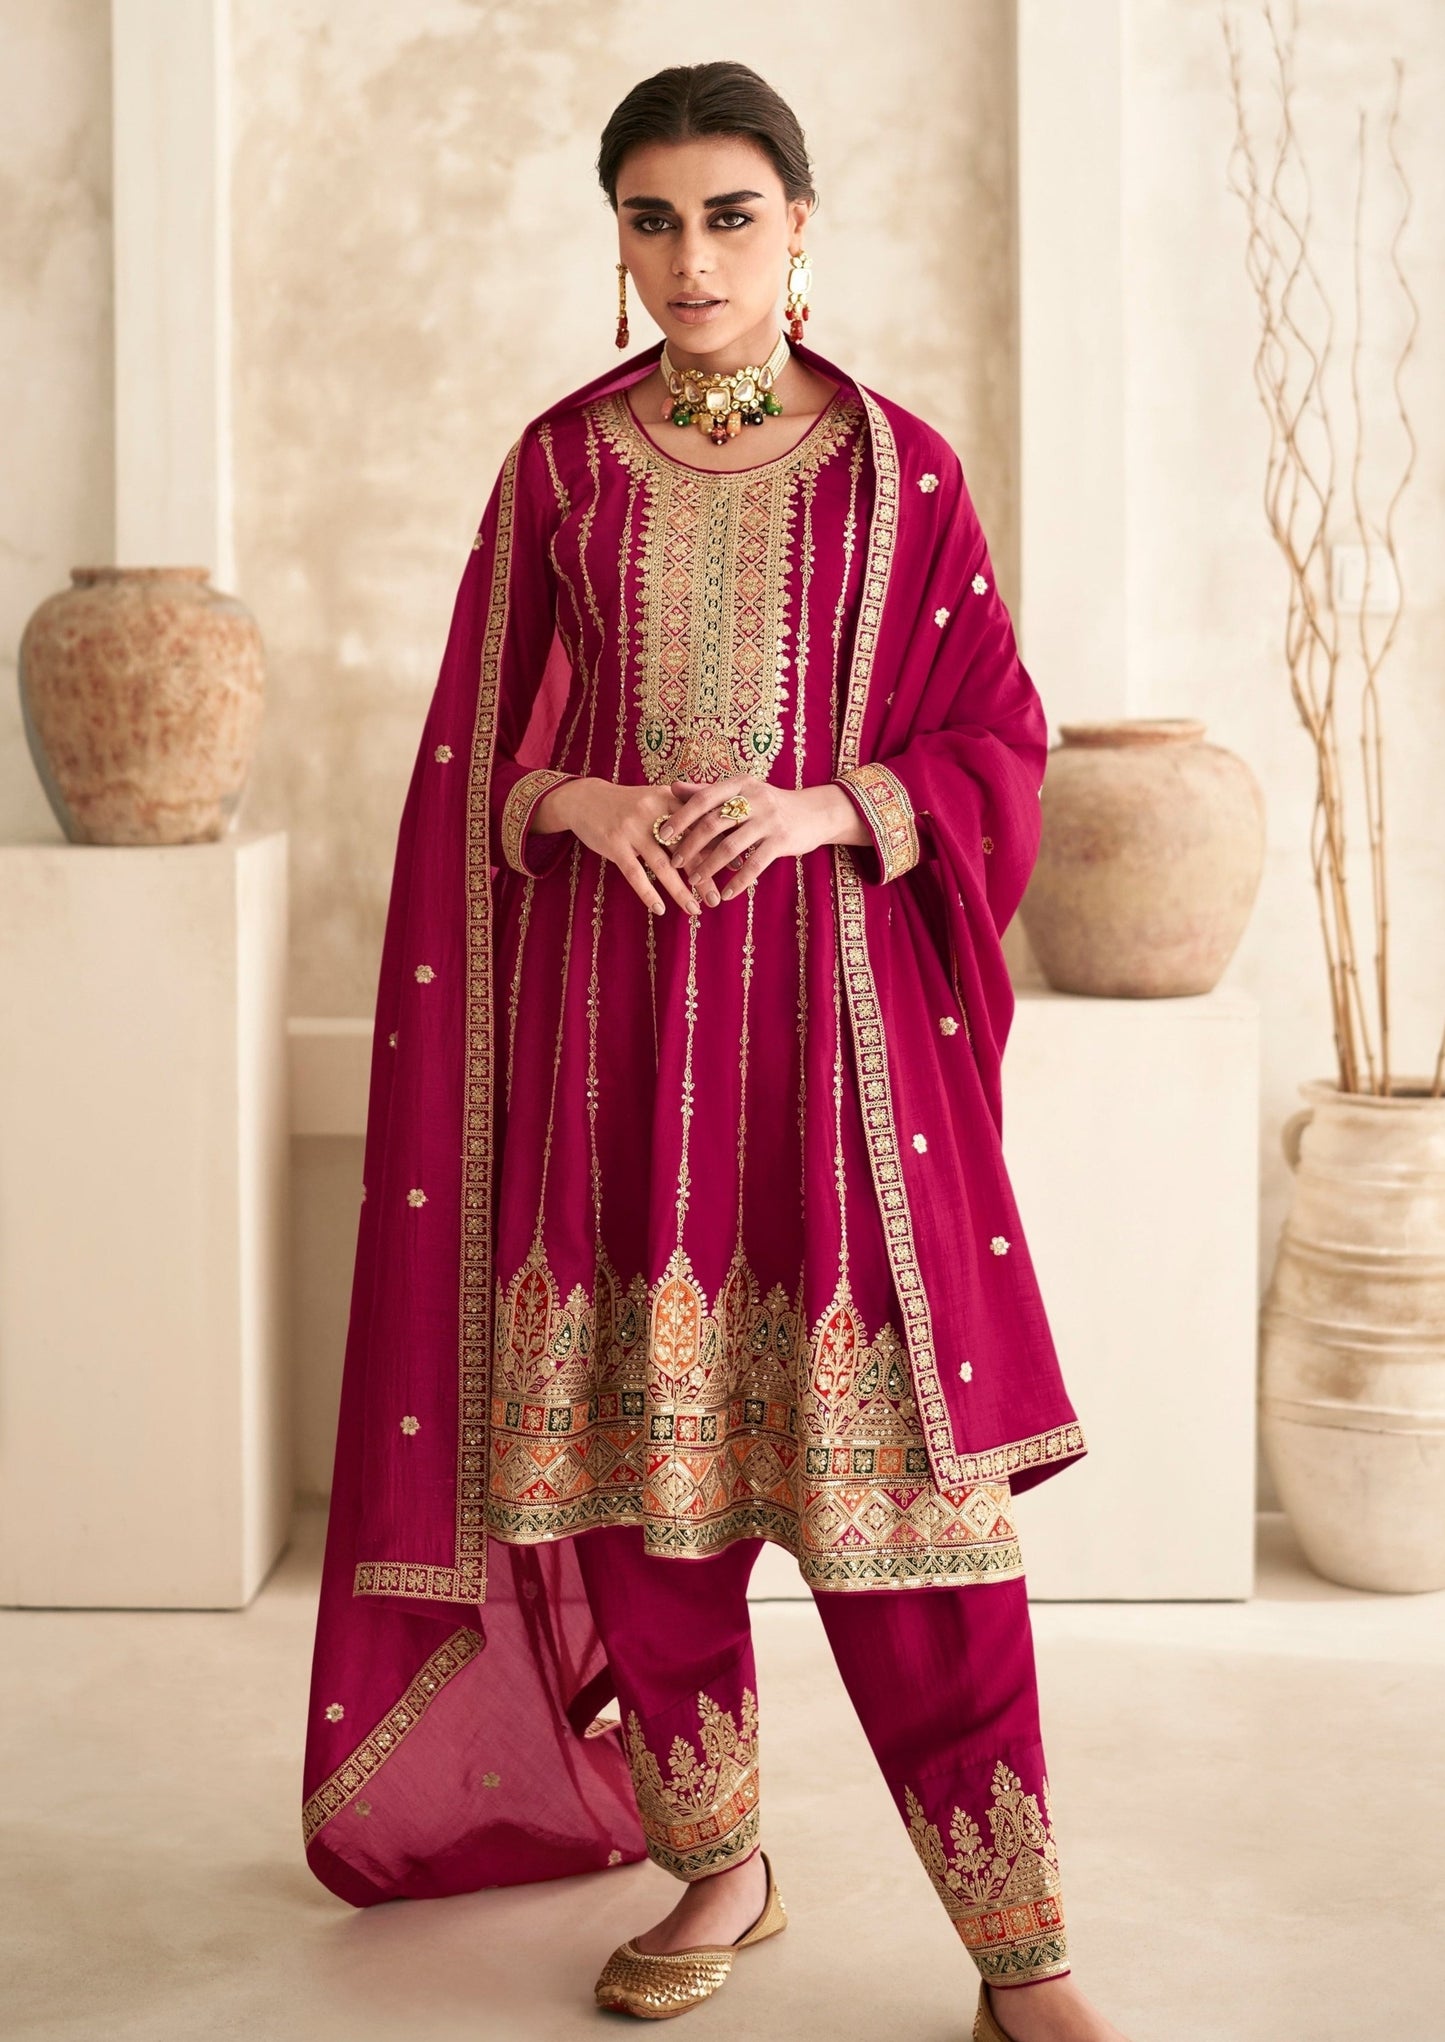 Luxury designer salwar suit bridal set online designs for karwachauth usa uae uk.